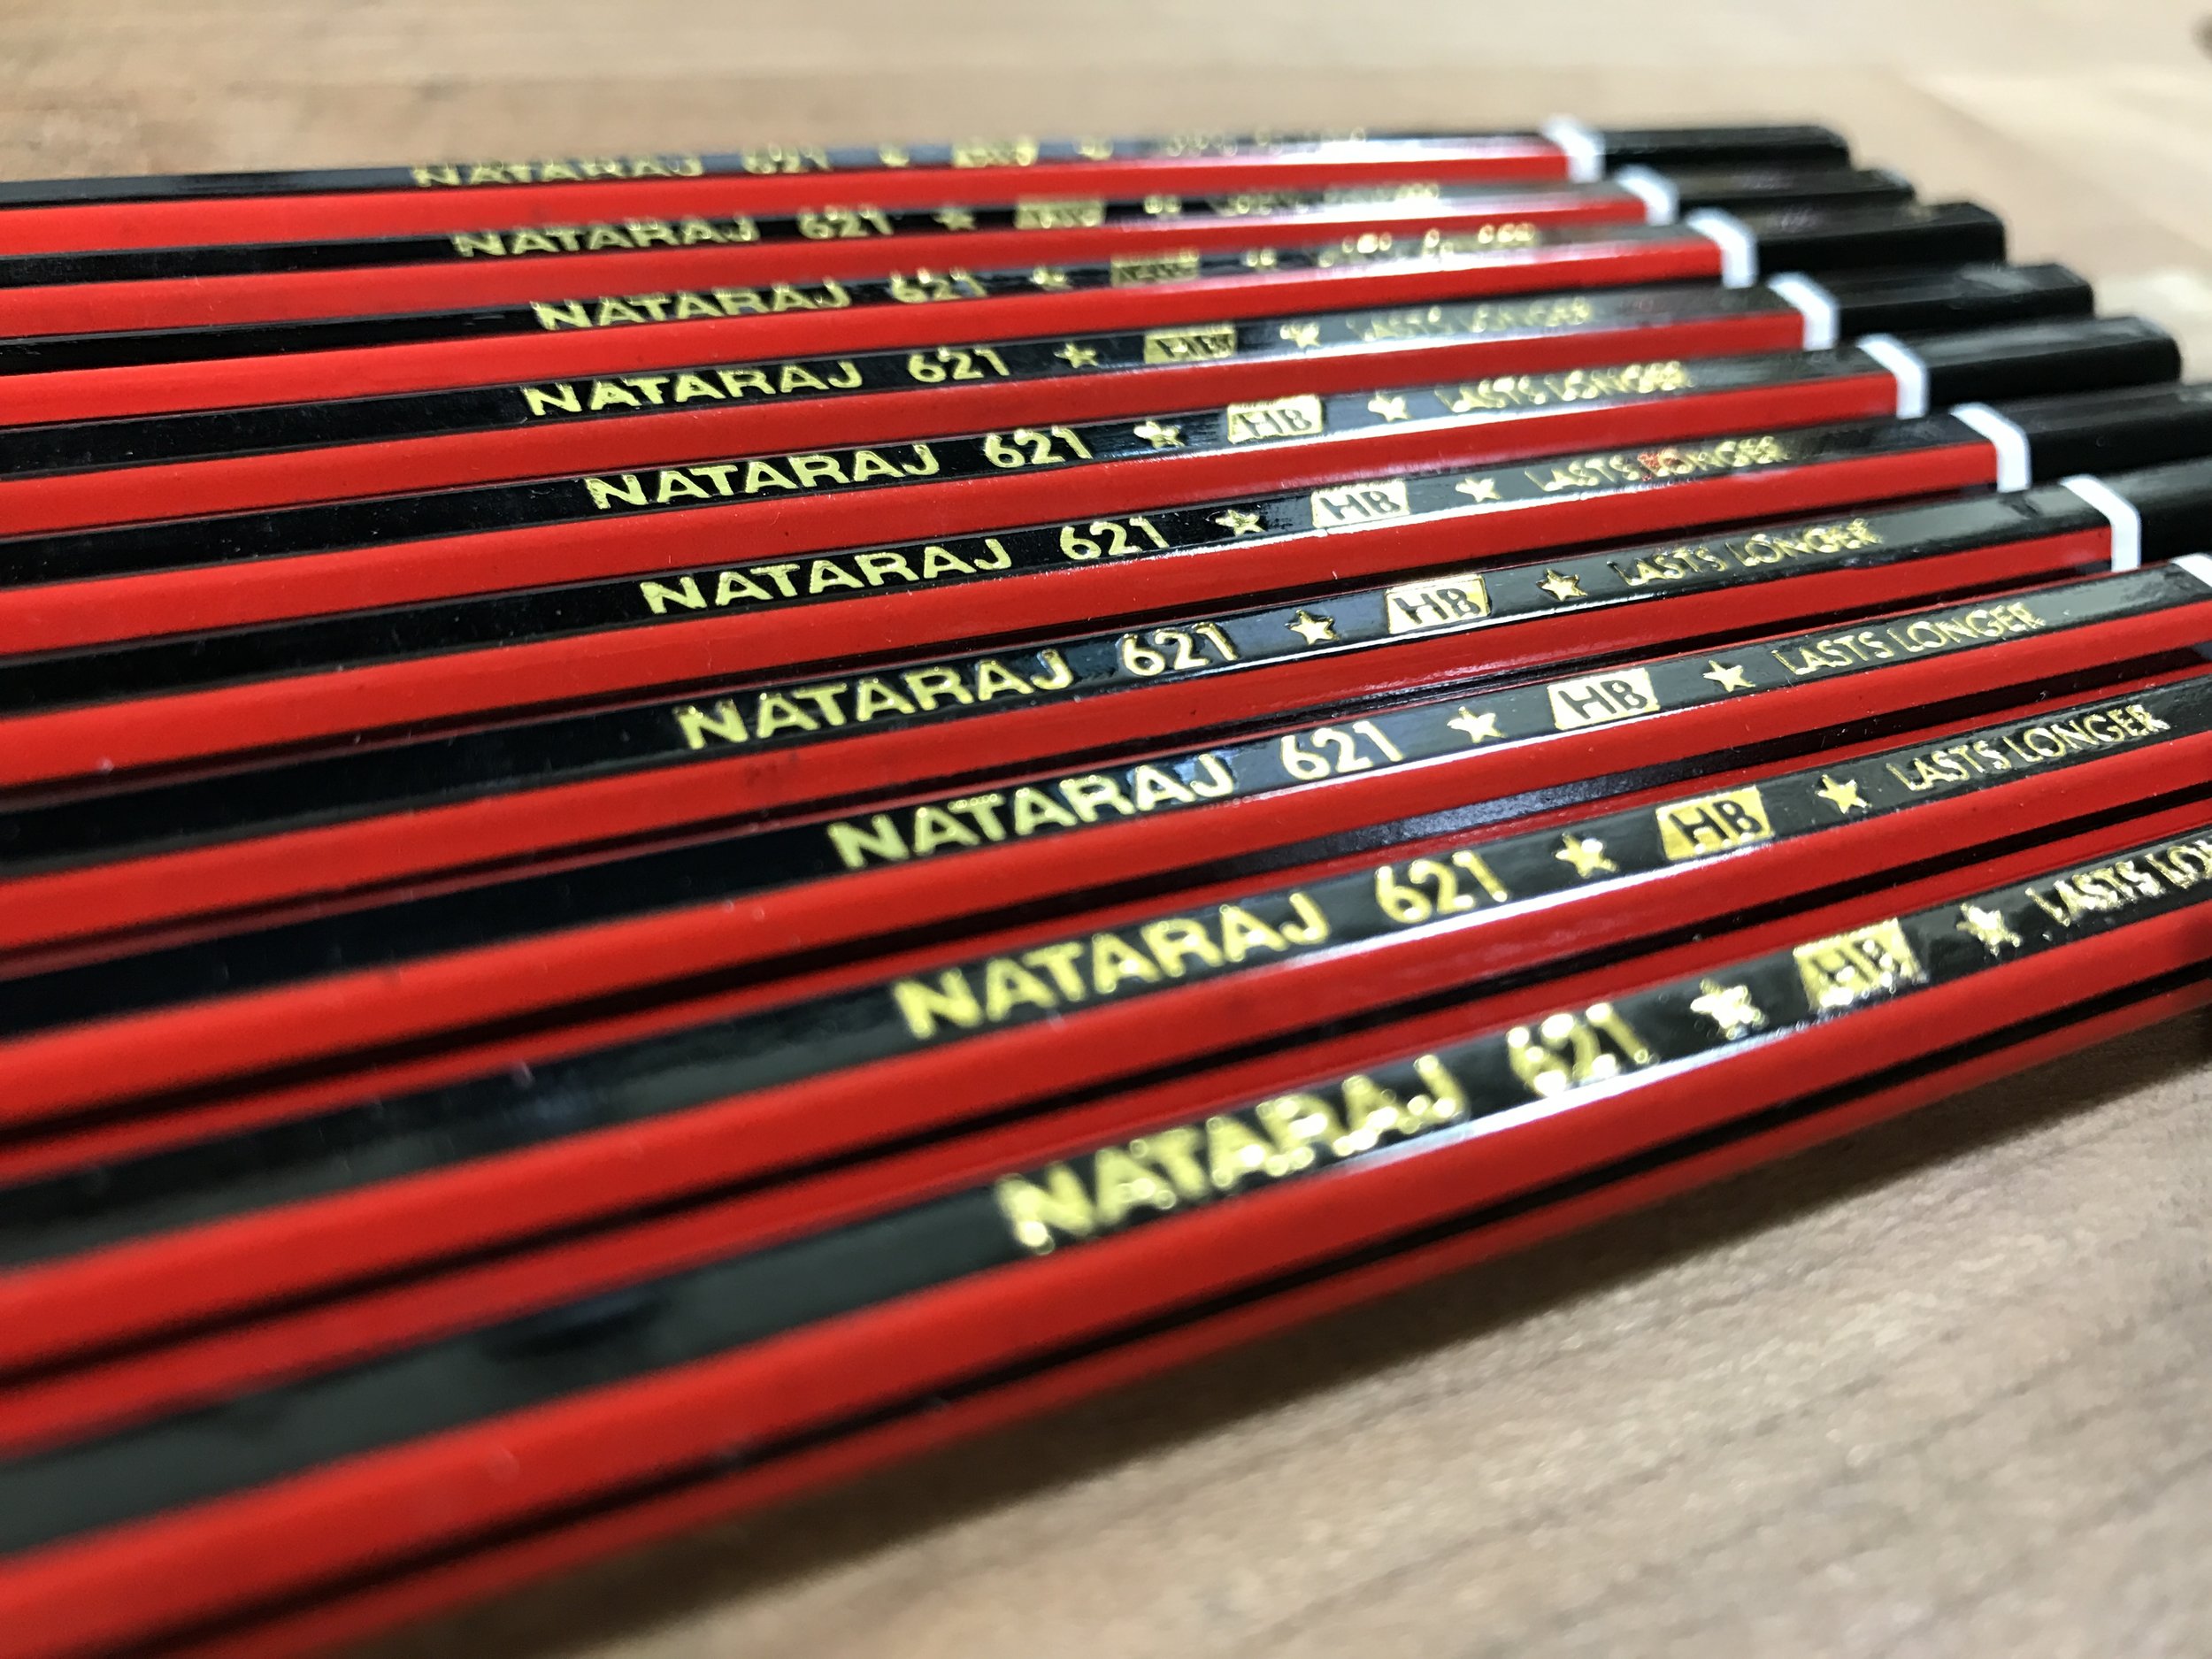 Details about   20x Nataraj 621 Pencil Sharpener 5 color home school office STATIONARY 